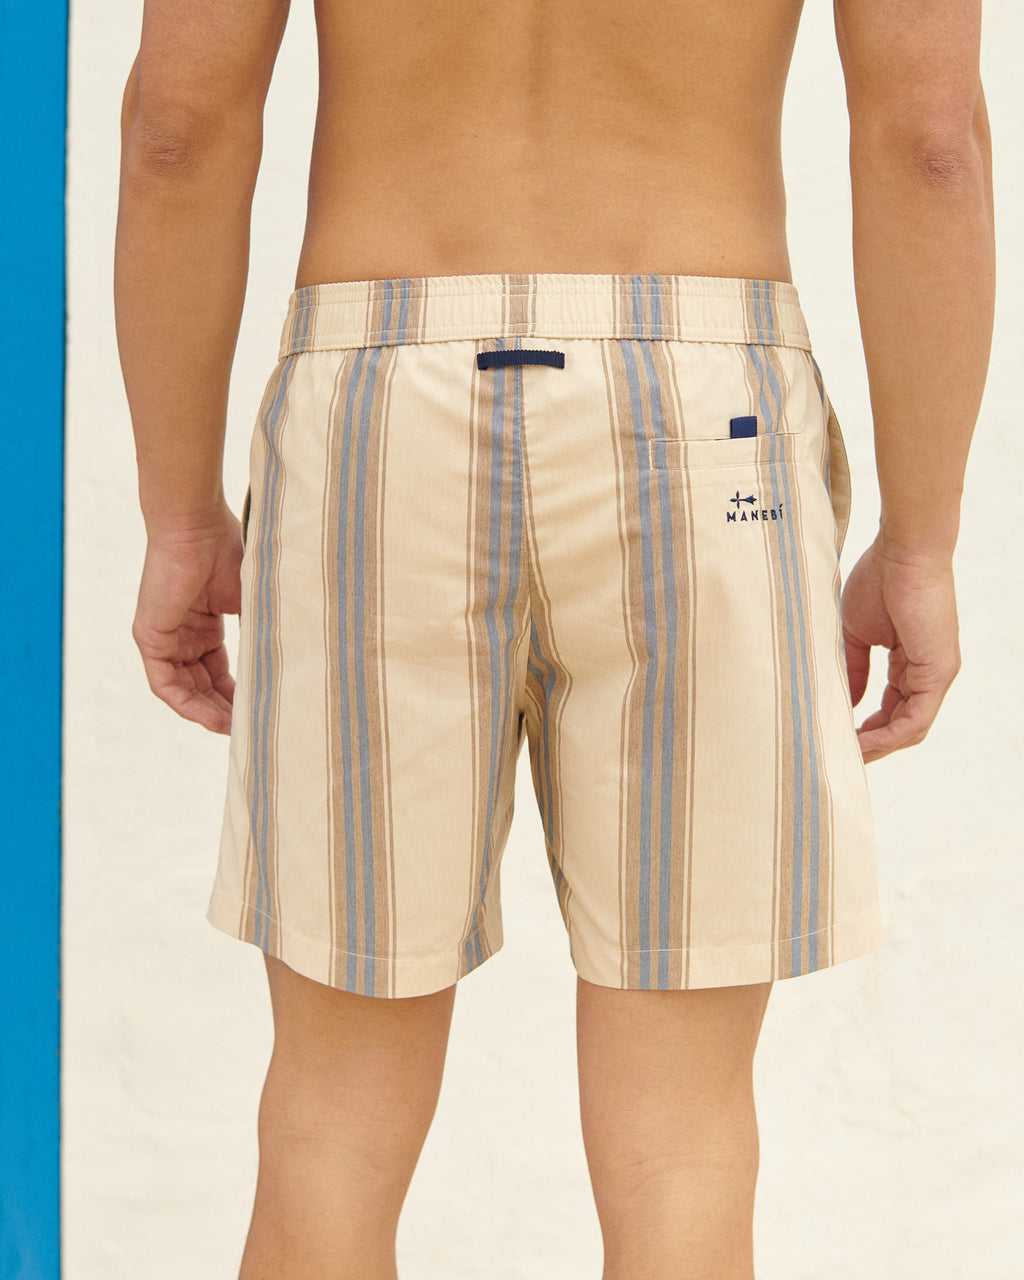 Printed Swim Shorts - Double Stripes - Navy Blue